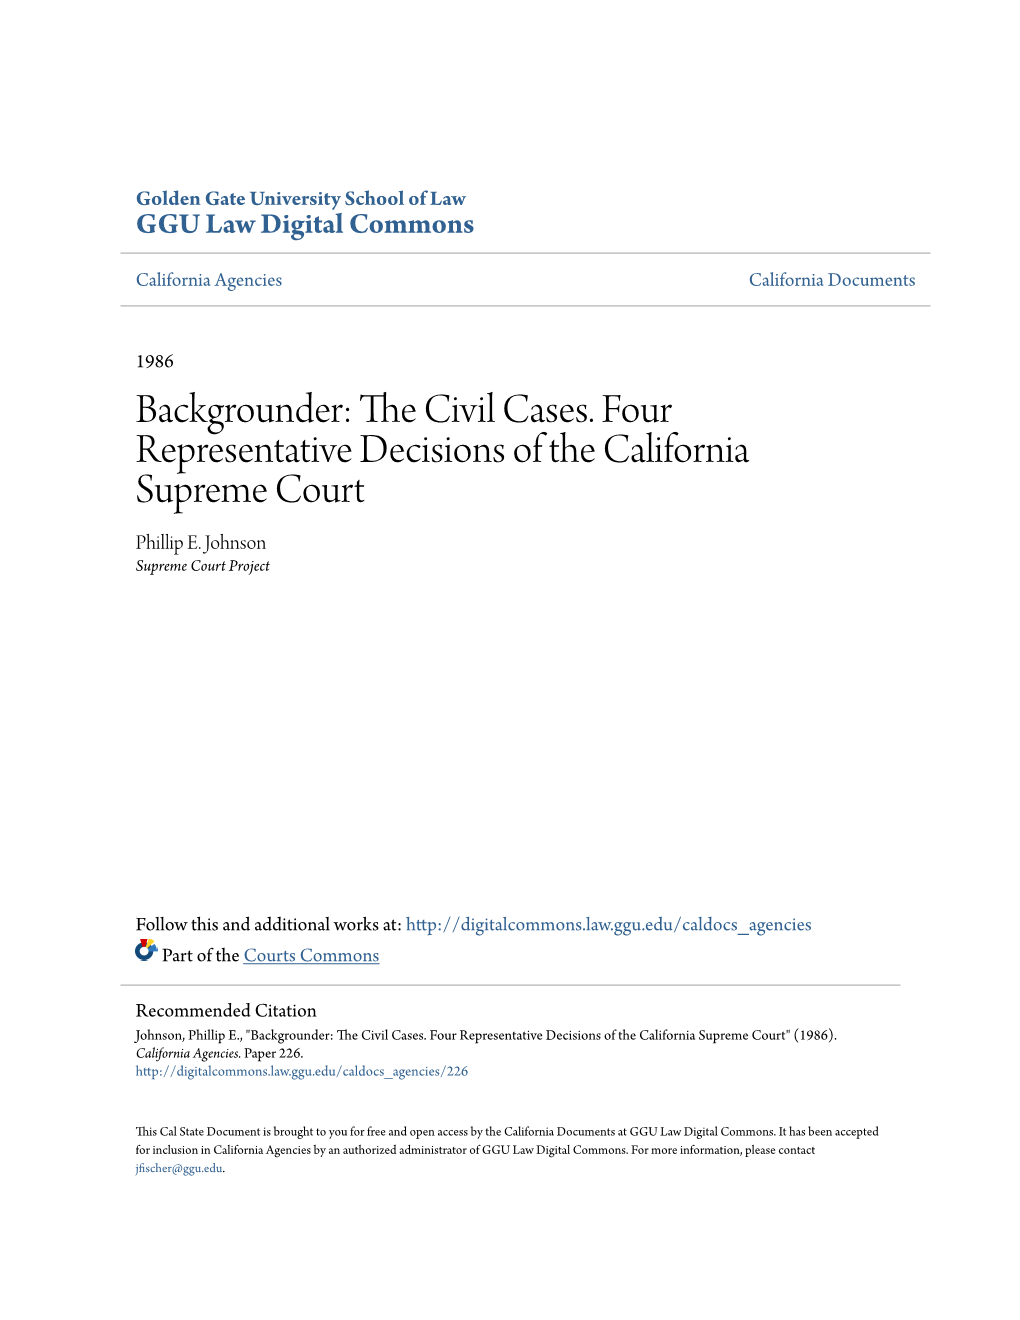 The Civil Cases. Four Representative Decisions of the California